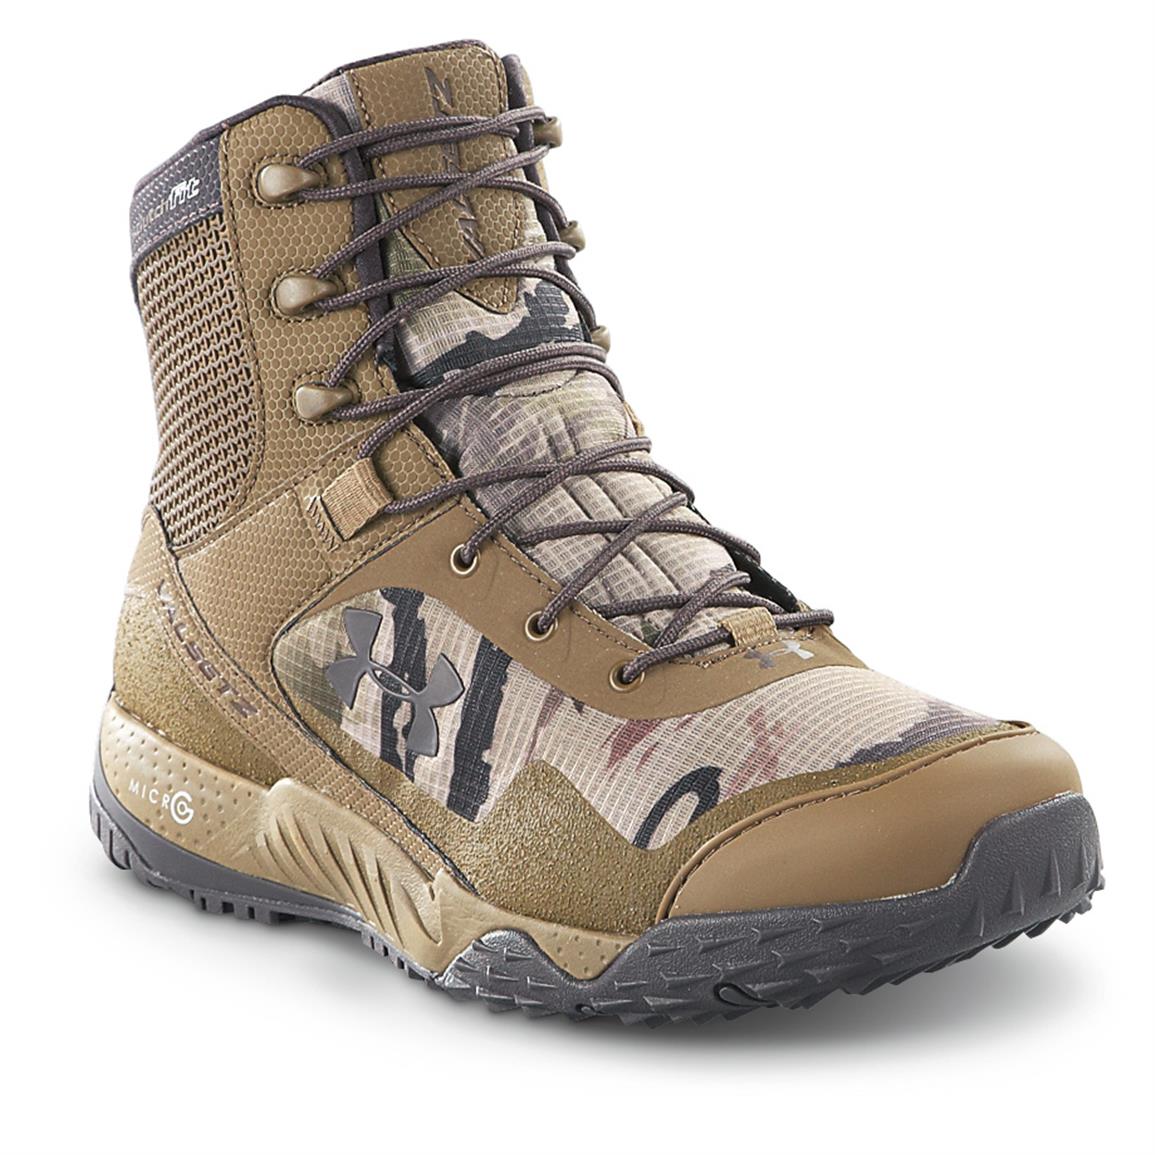 Under Armour Men's Valsetz Tactical RTS Tactical Boots - 592641, Combat ...